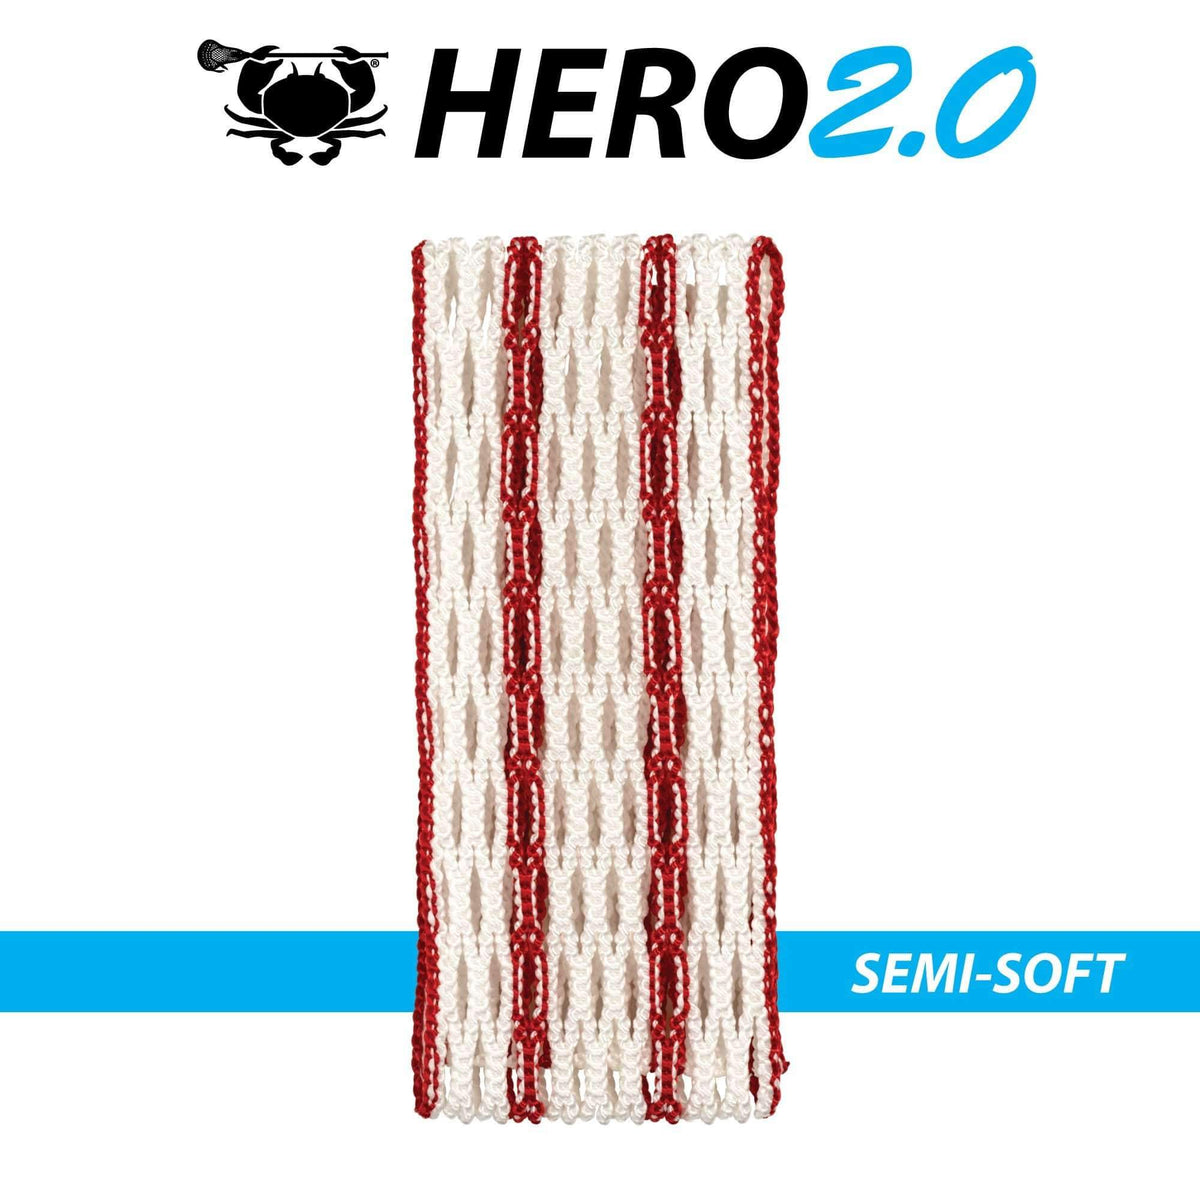 East Coast Dyes Stringing Supplies Semi-Soft / Red Striker ECD Hero 2.0 Semi-Soft Striker Lacrosse Mesh from Lacrosse Fanatic